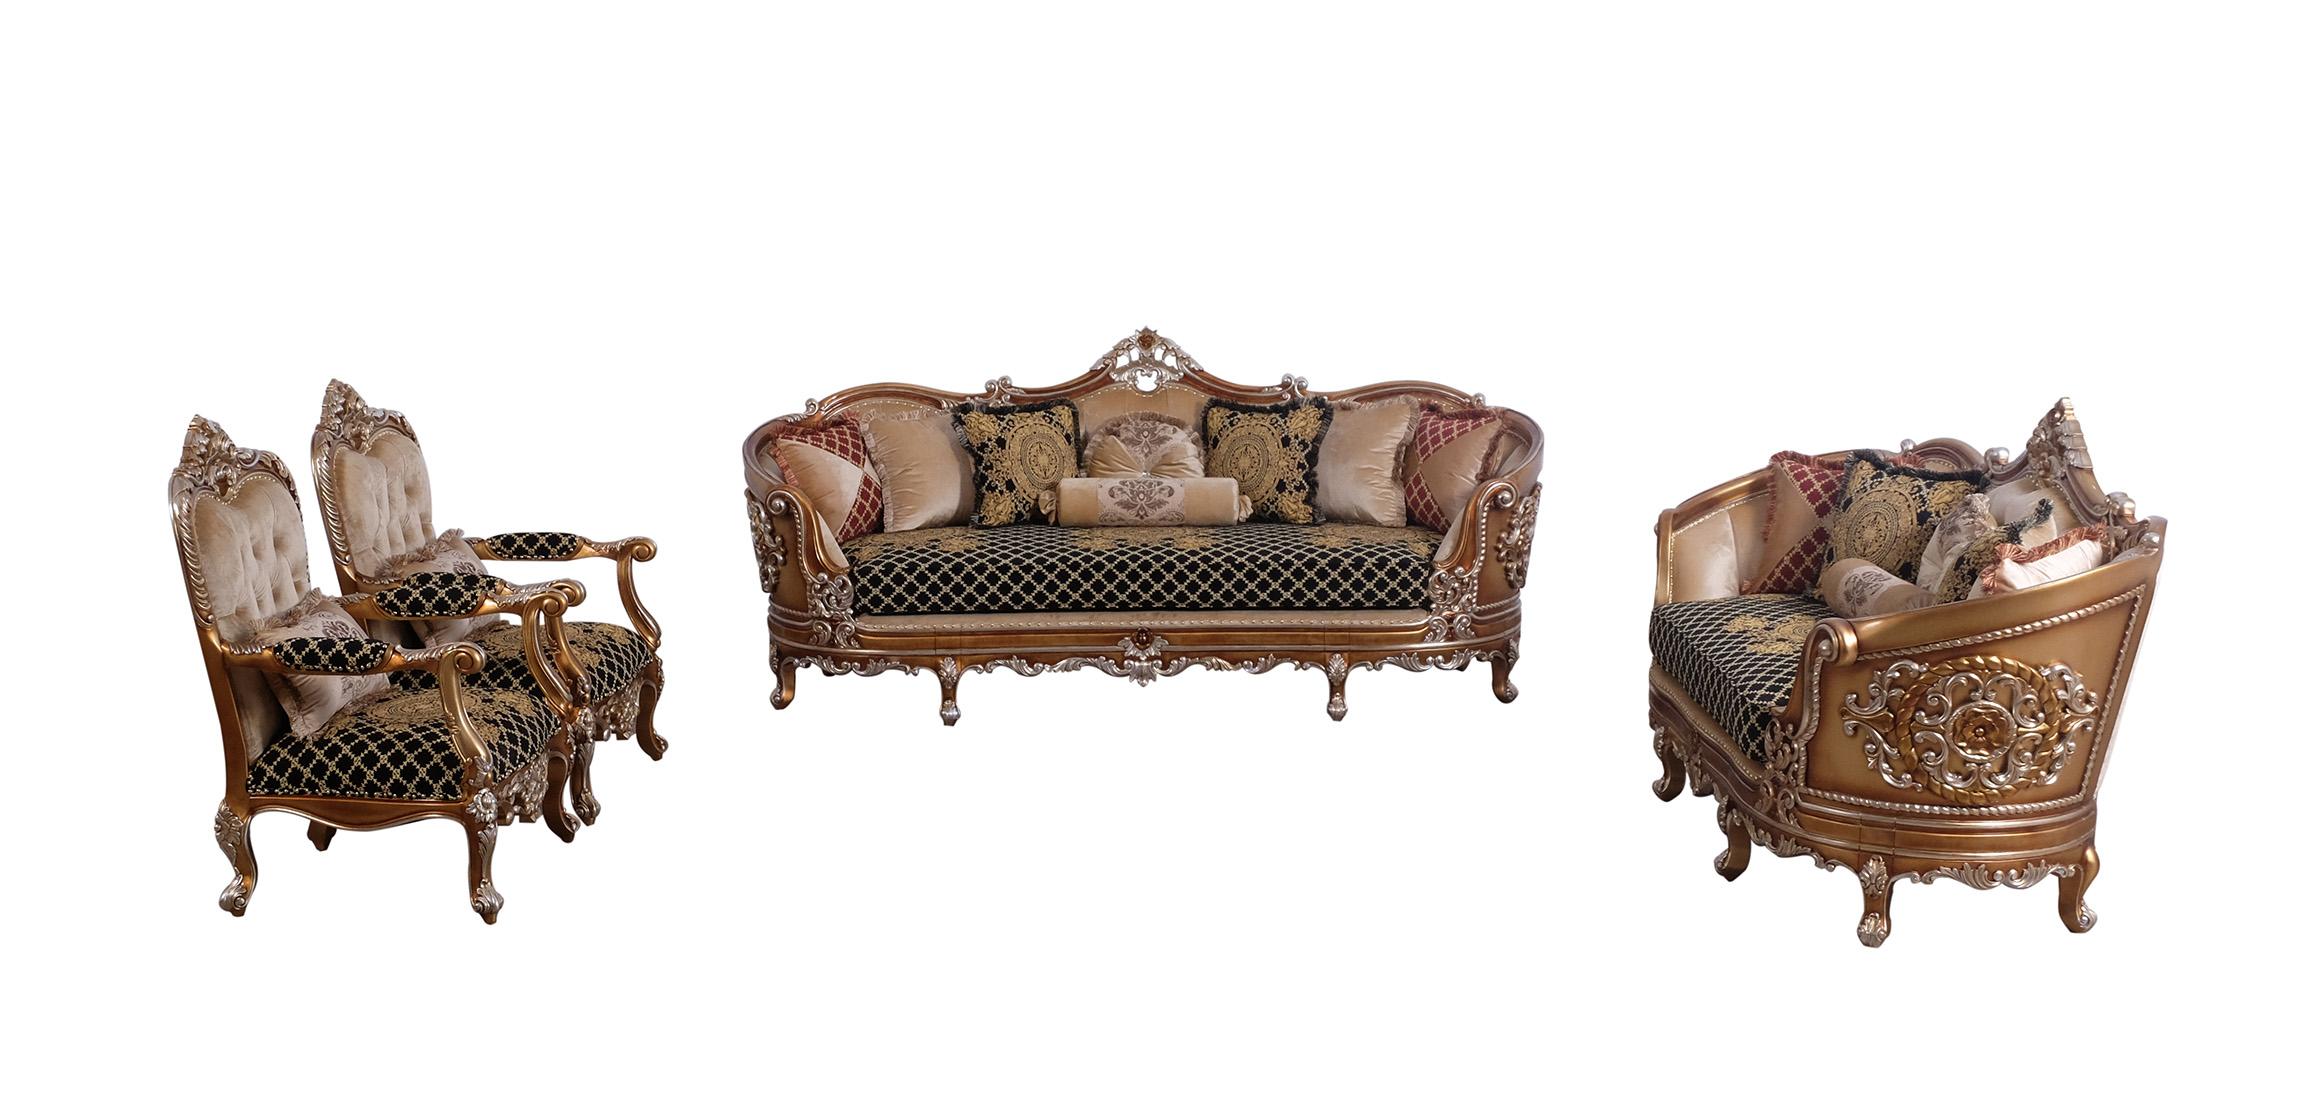 Classic, Traditional Sofa Set SAINT GERMAIN II 35552-Set-4 in Sand, Gold, Black Fabric